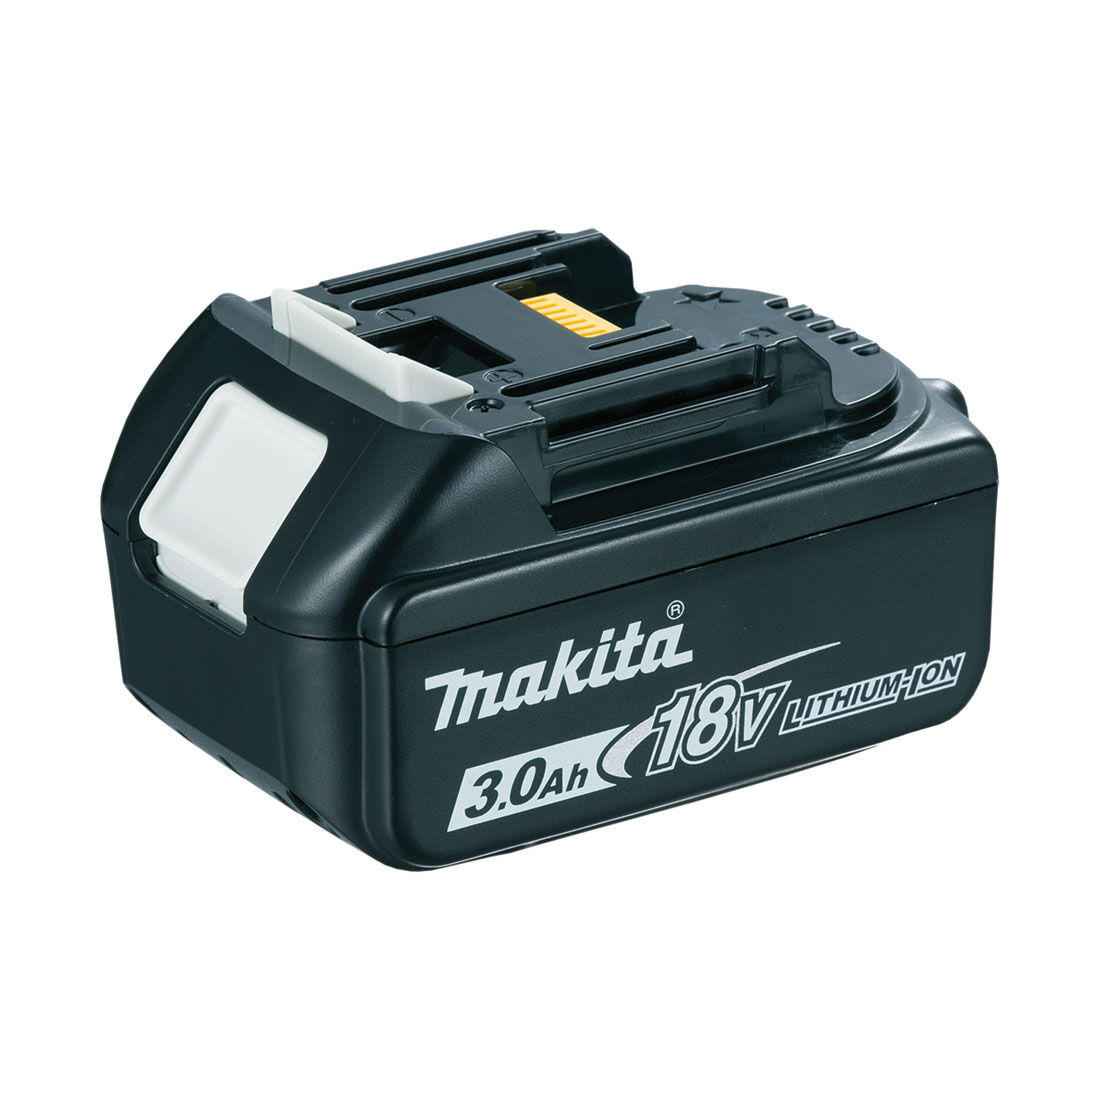 Makita 18V 3.0Ah Battery, , scanz_hi-res